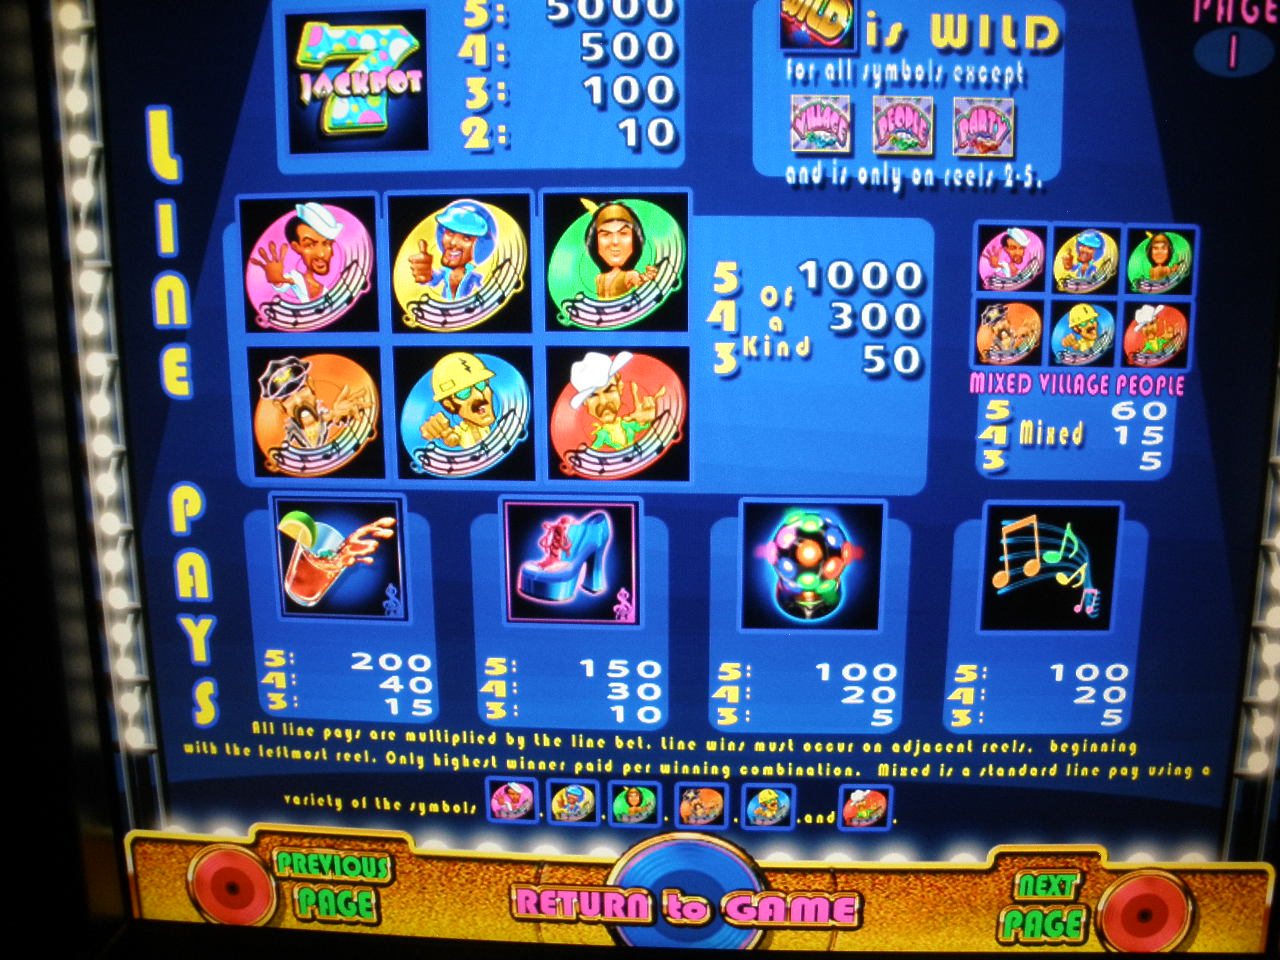 village people party slot machine for sale